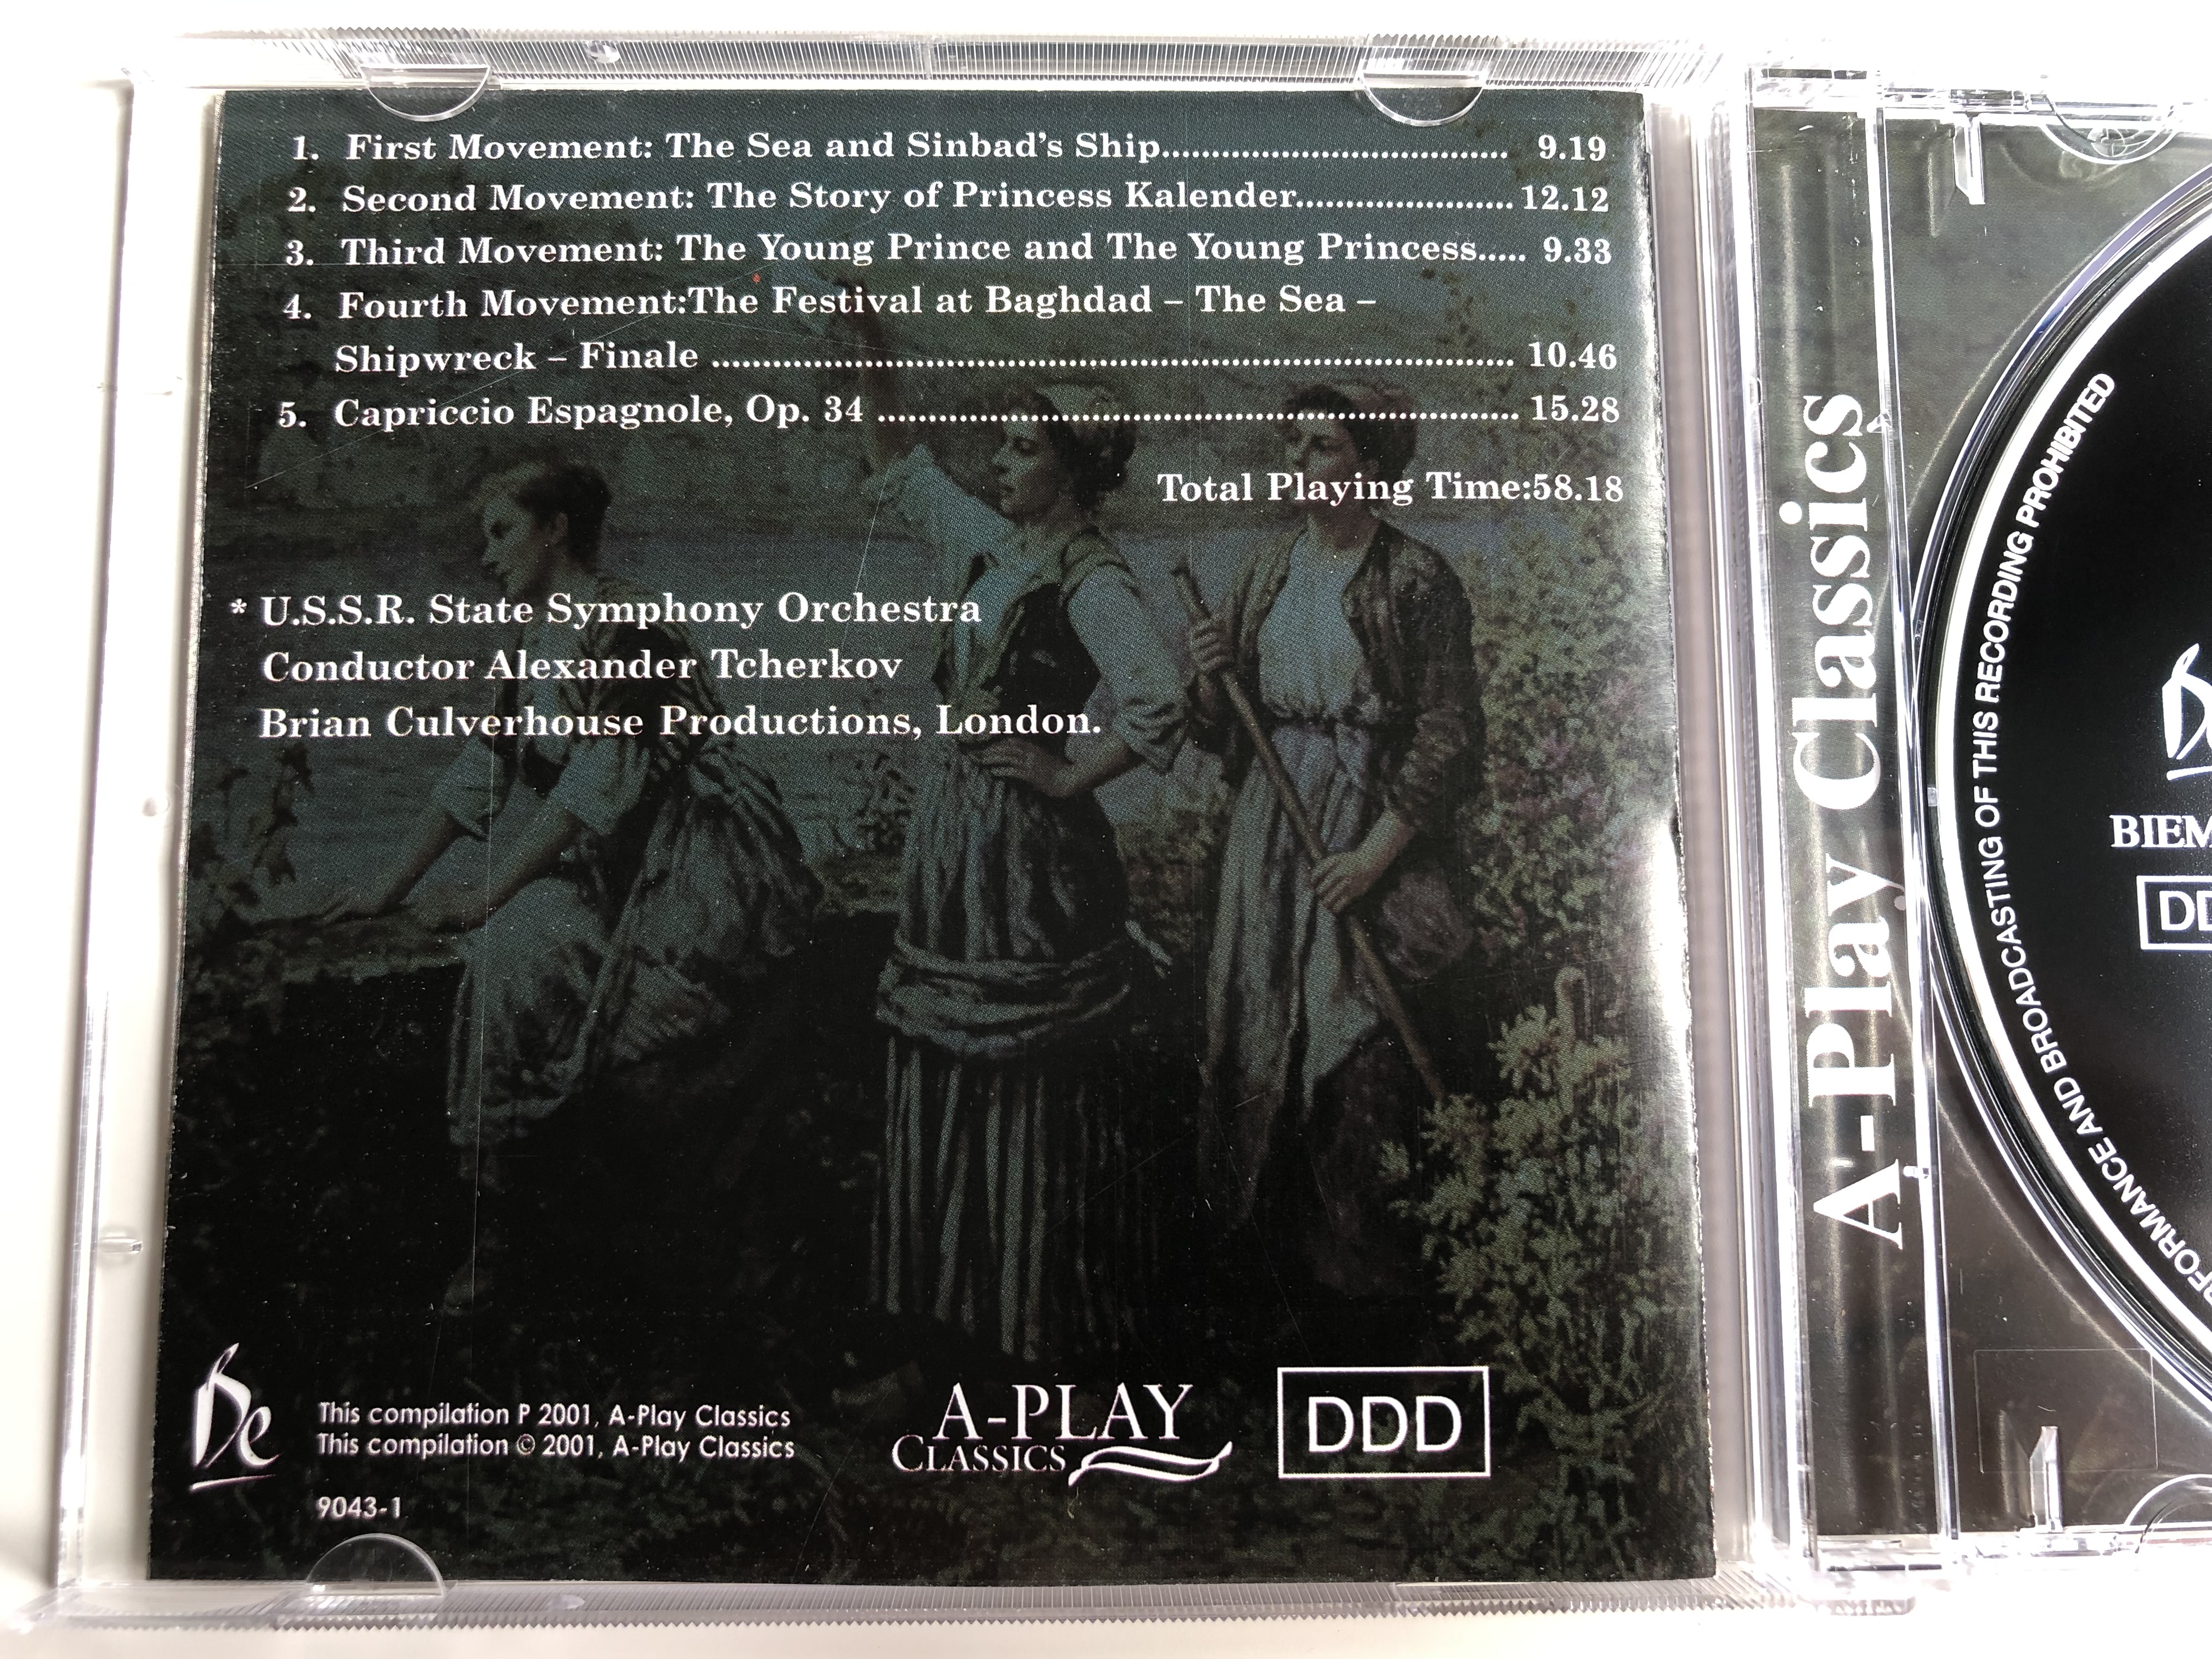 rimsky-korsakov-scheherazade-symphonic-suite-op.-95-u.s.s.r-state-symphony-orchestra-conducted-alexander-tcherkov-a-play-classics-audio-cd-9043-2-3-.jpg